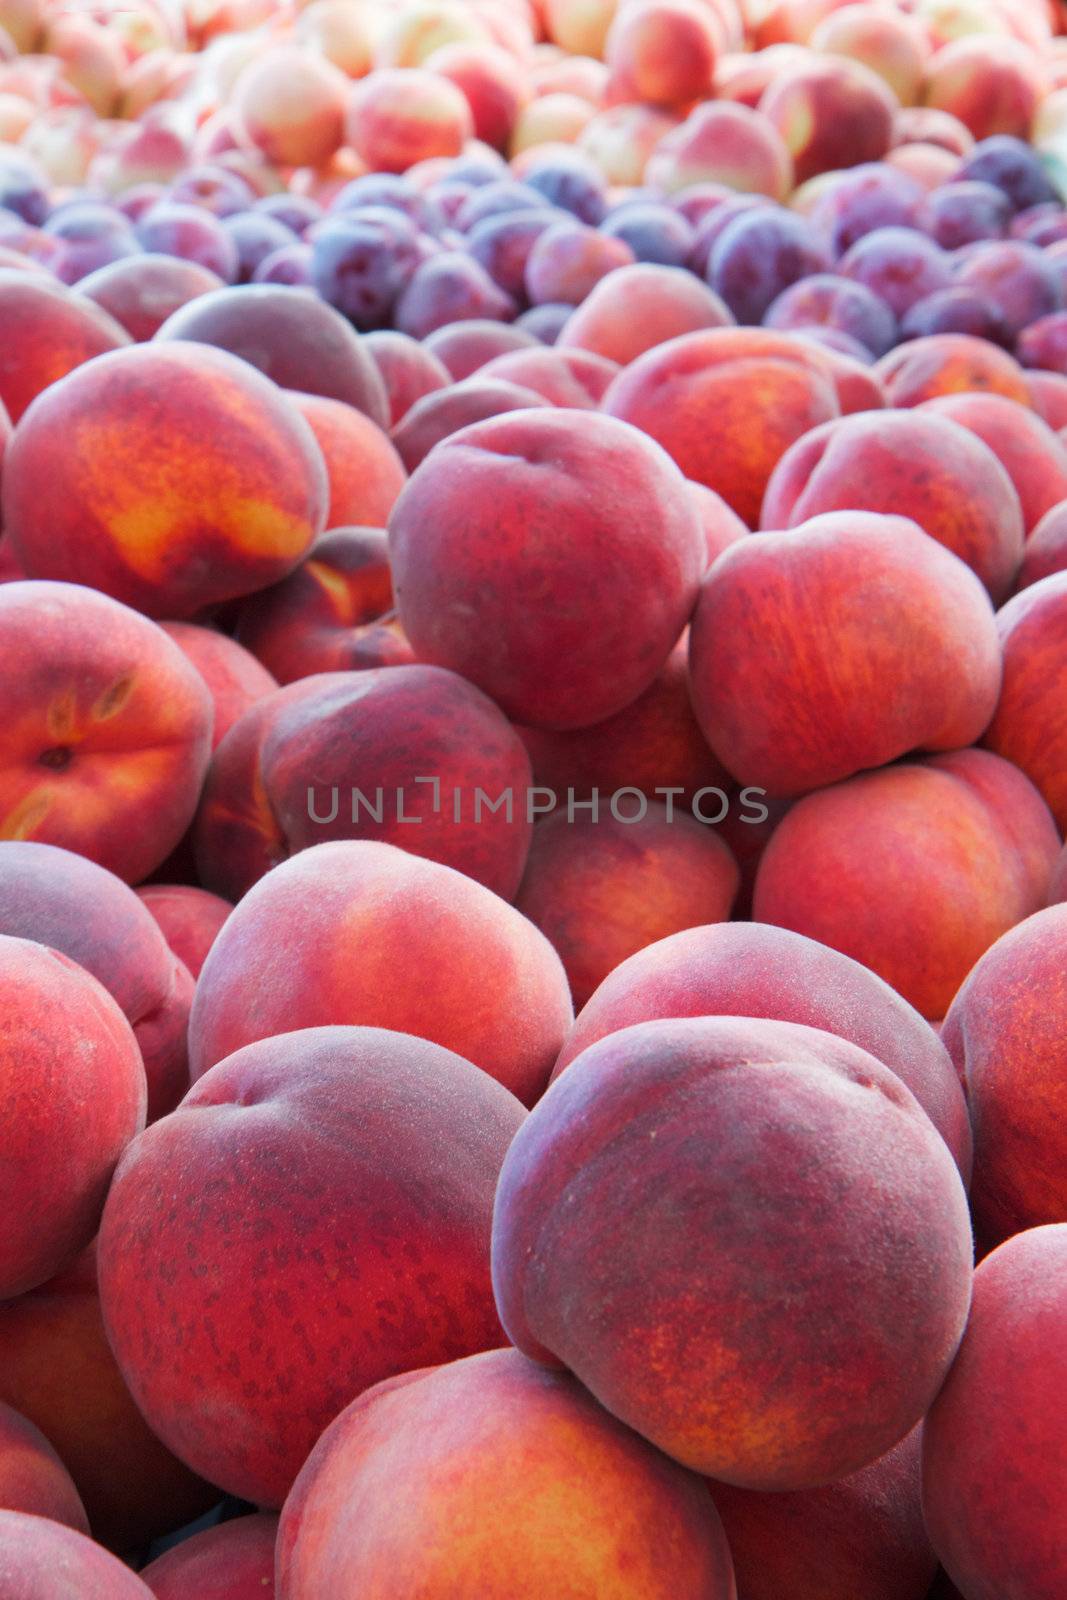 Peaches Market by bobkeenan